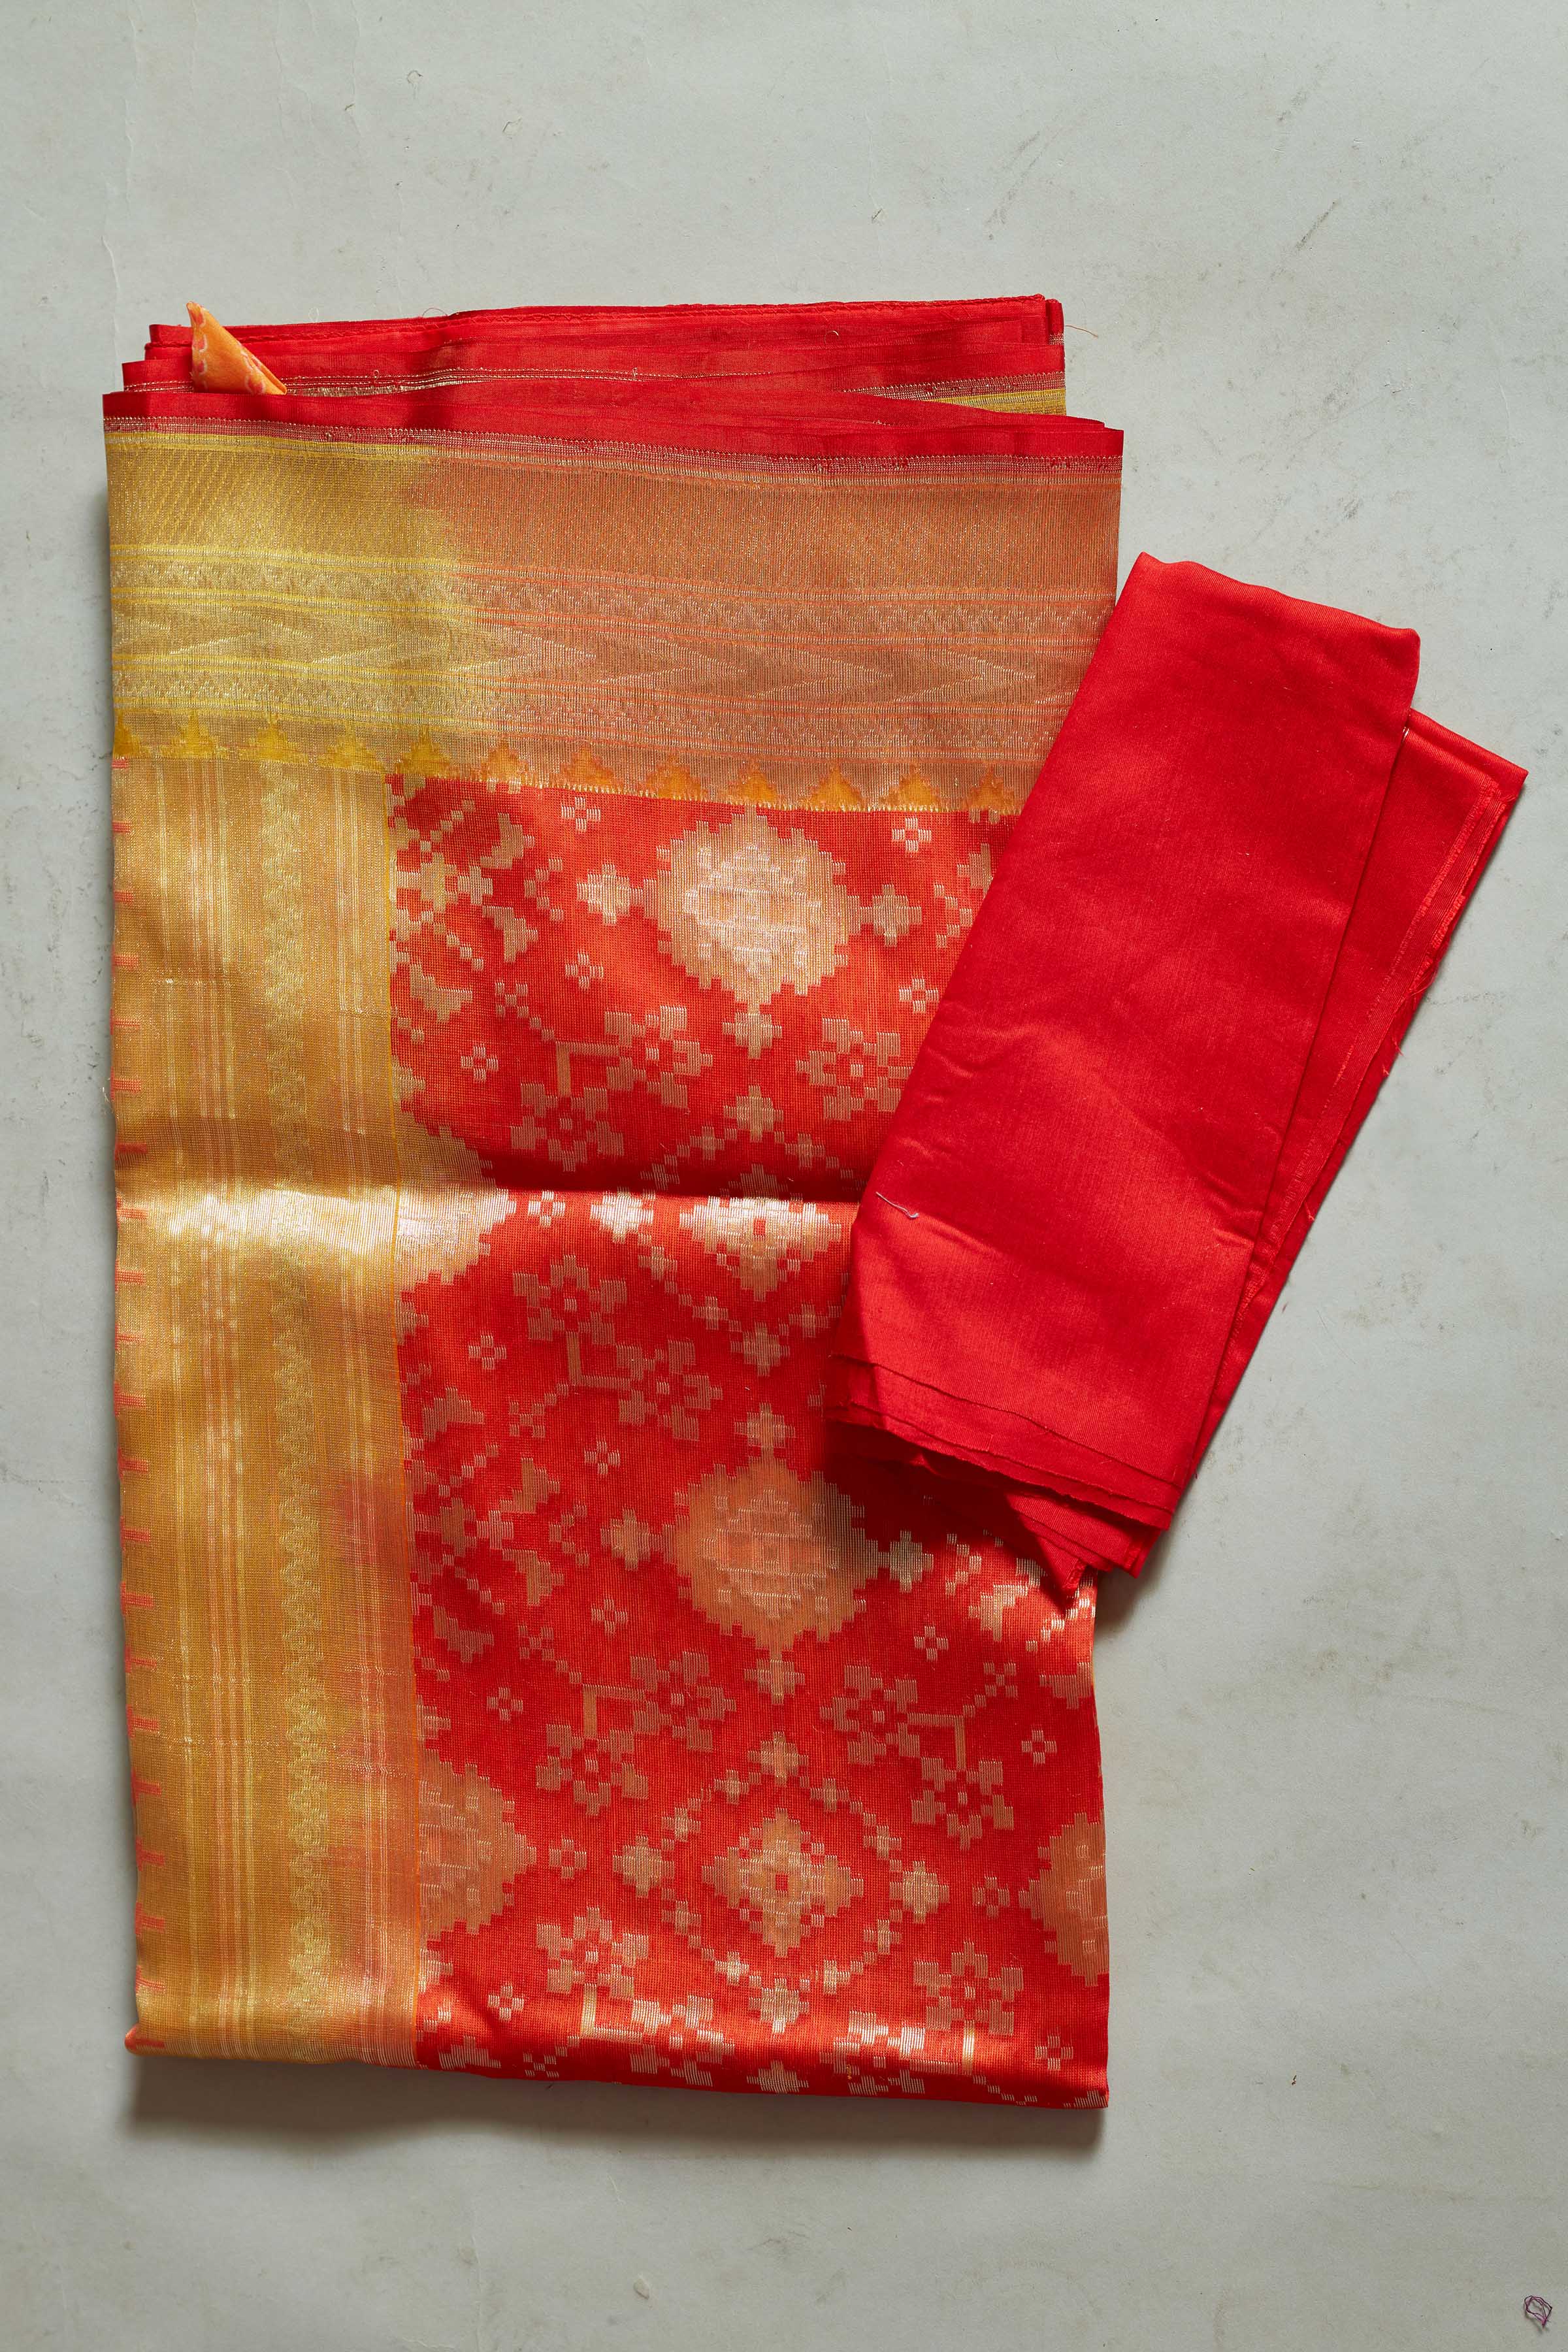 Buy yellow Kora Banarasi sari online in USA with red zari border. Look your best on festive occasions in latest designer sarees, pure silk sarees, Kanjivaram silk saris, handwoven saris, tussar silk sarees, embroidered saris from Pure Elegance Indian clothing store in USA.-blouse